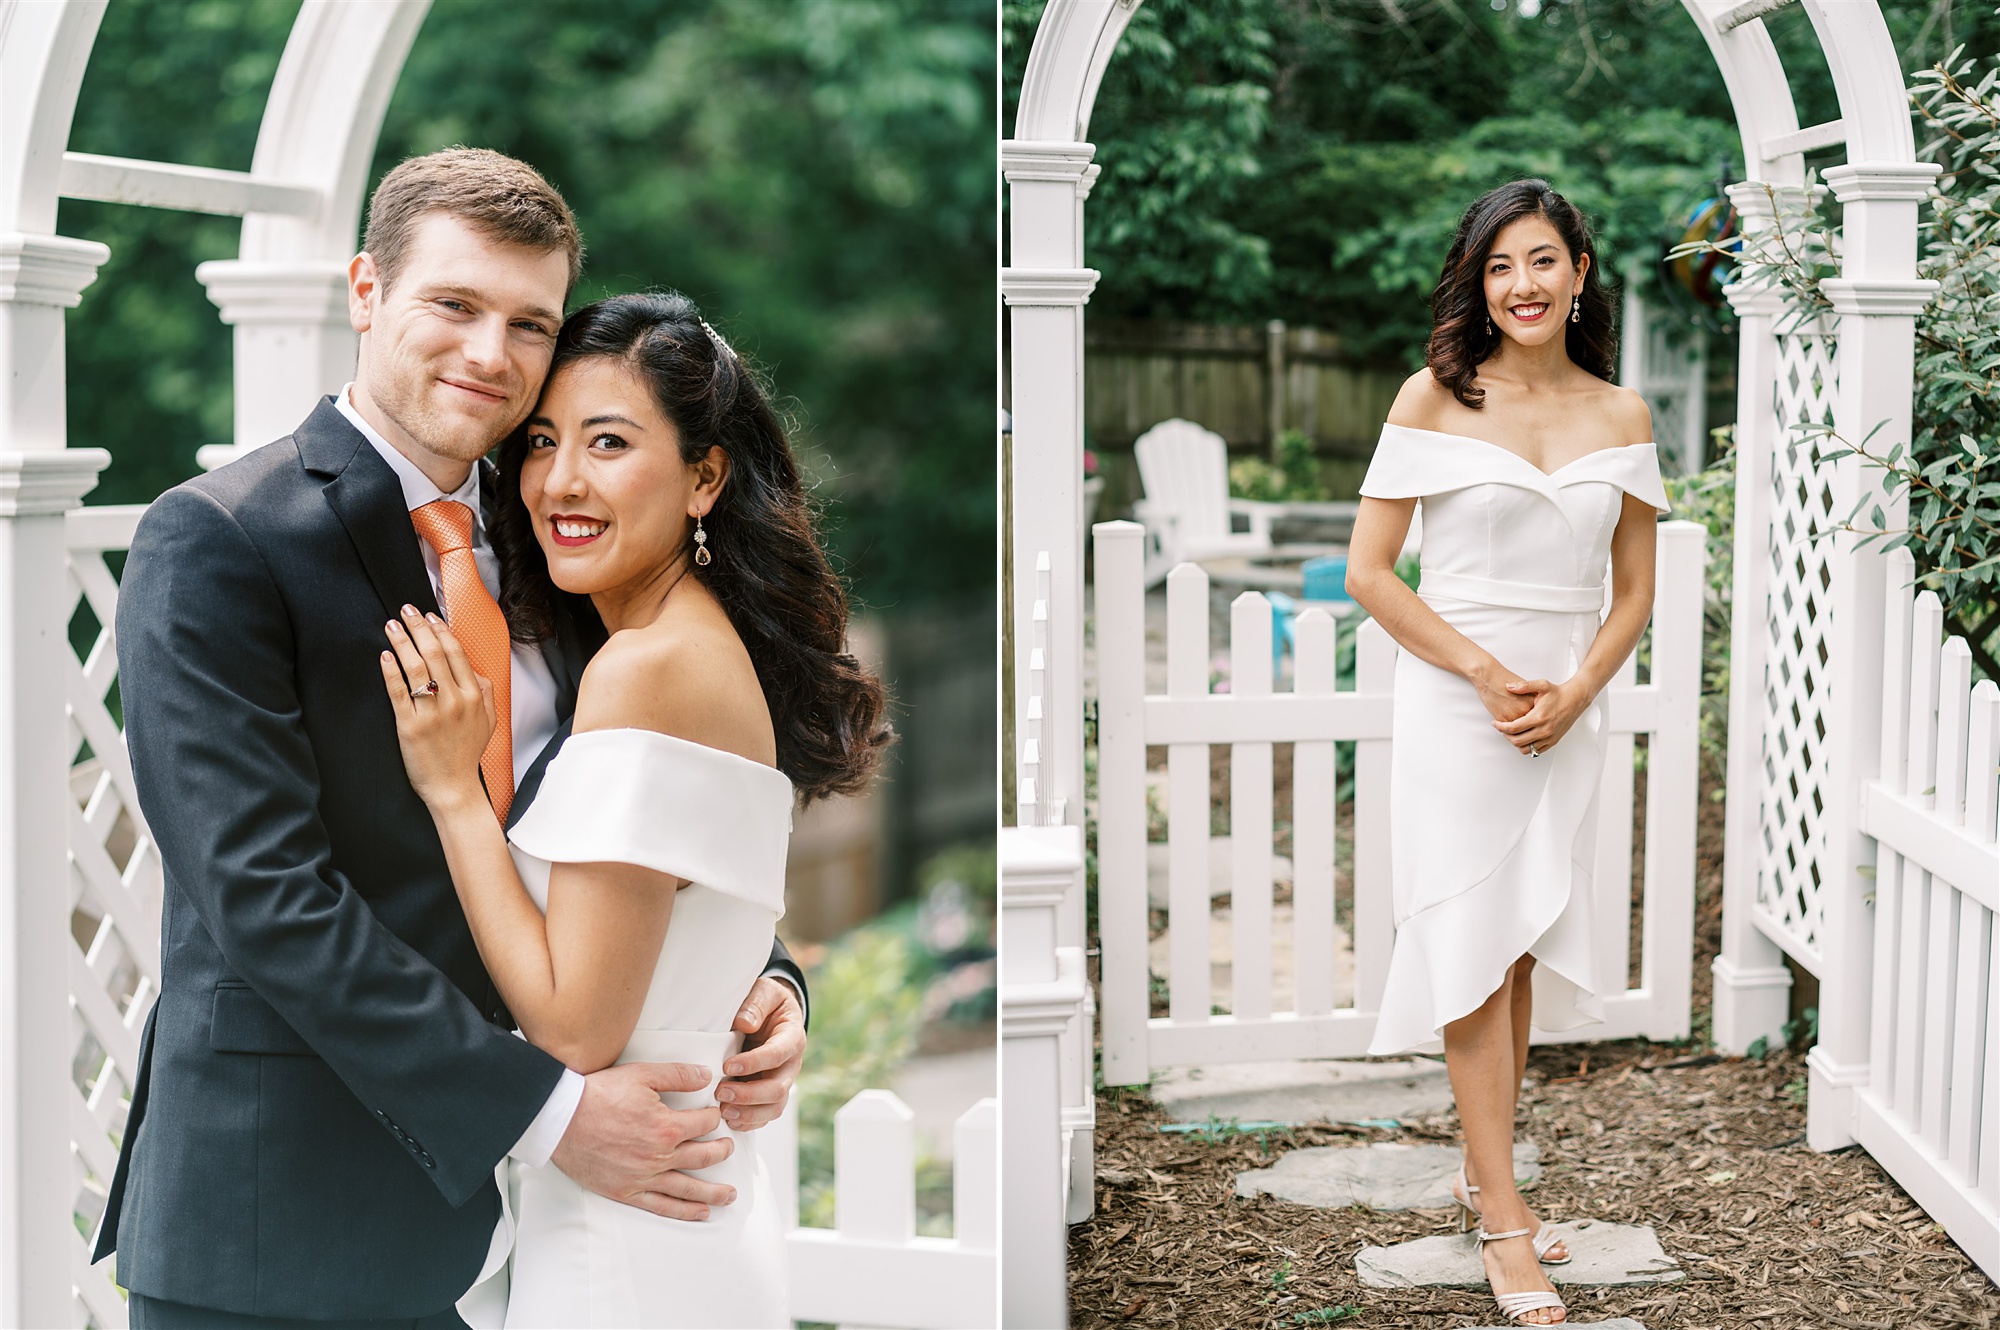 newlyweds pose in backyard during portraits before intimate backyard wedding